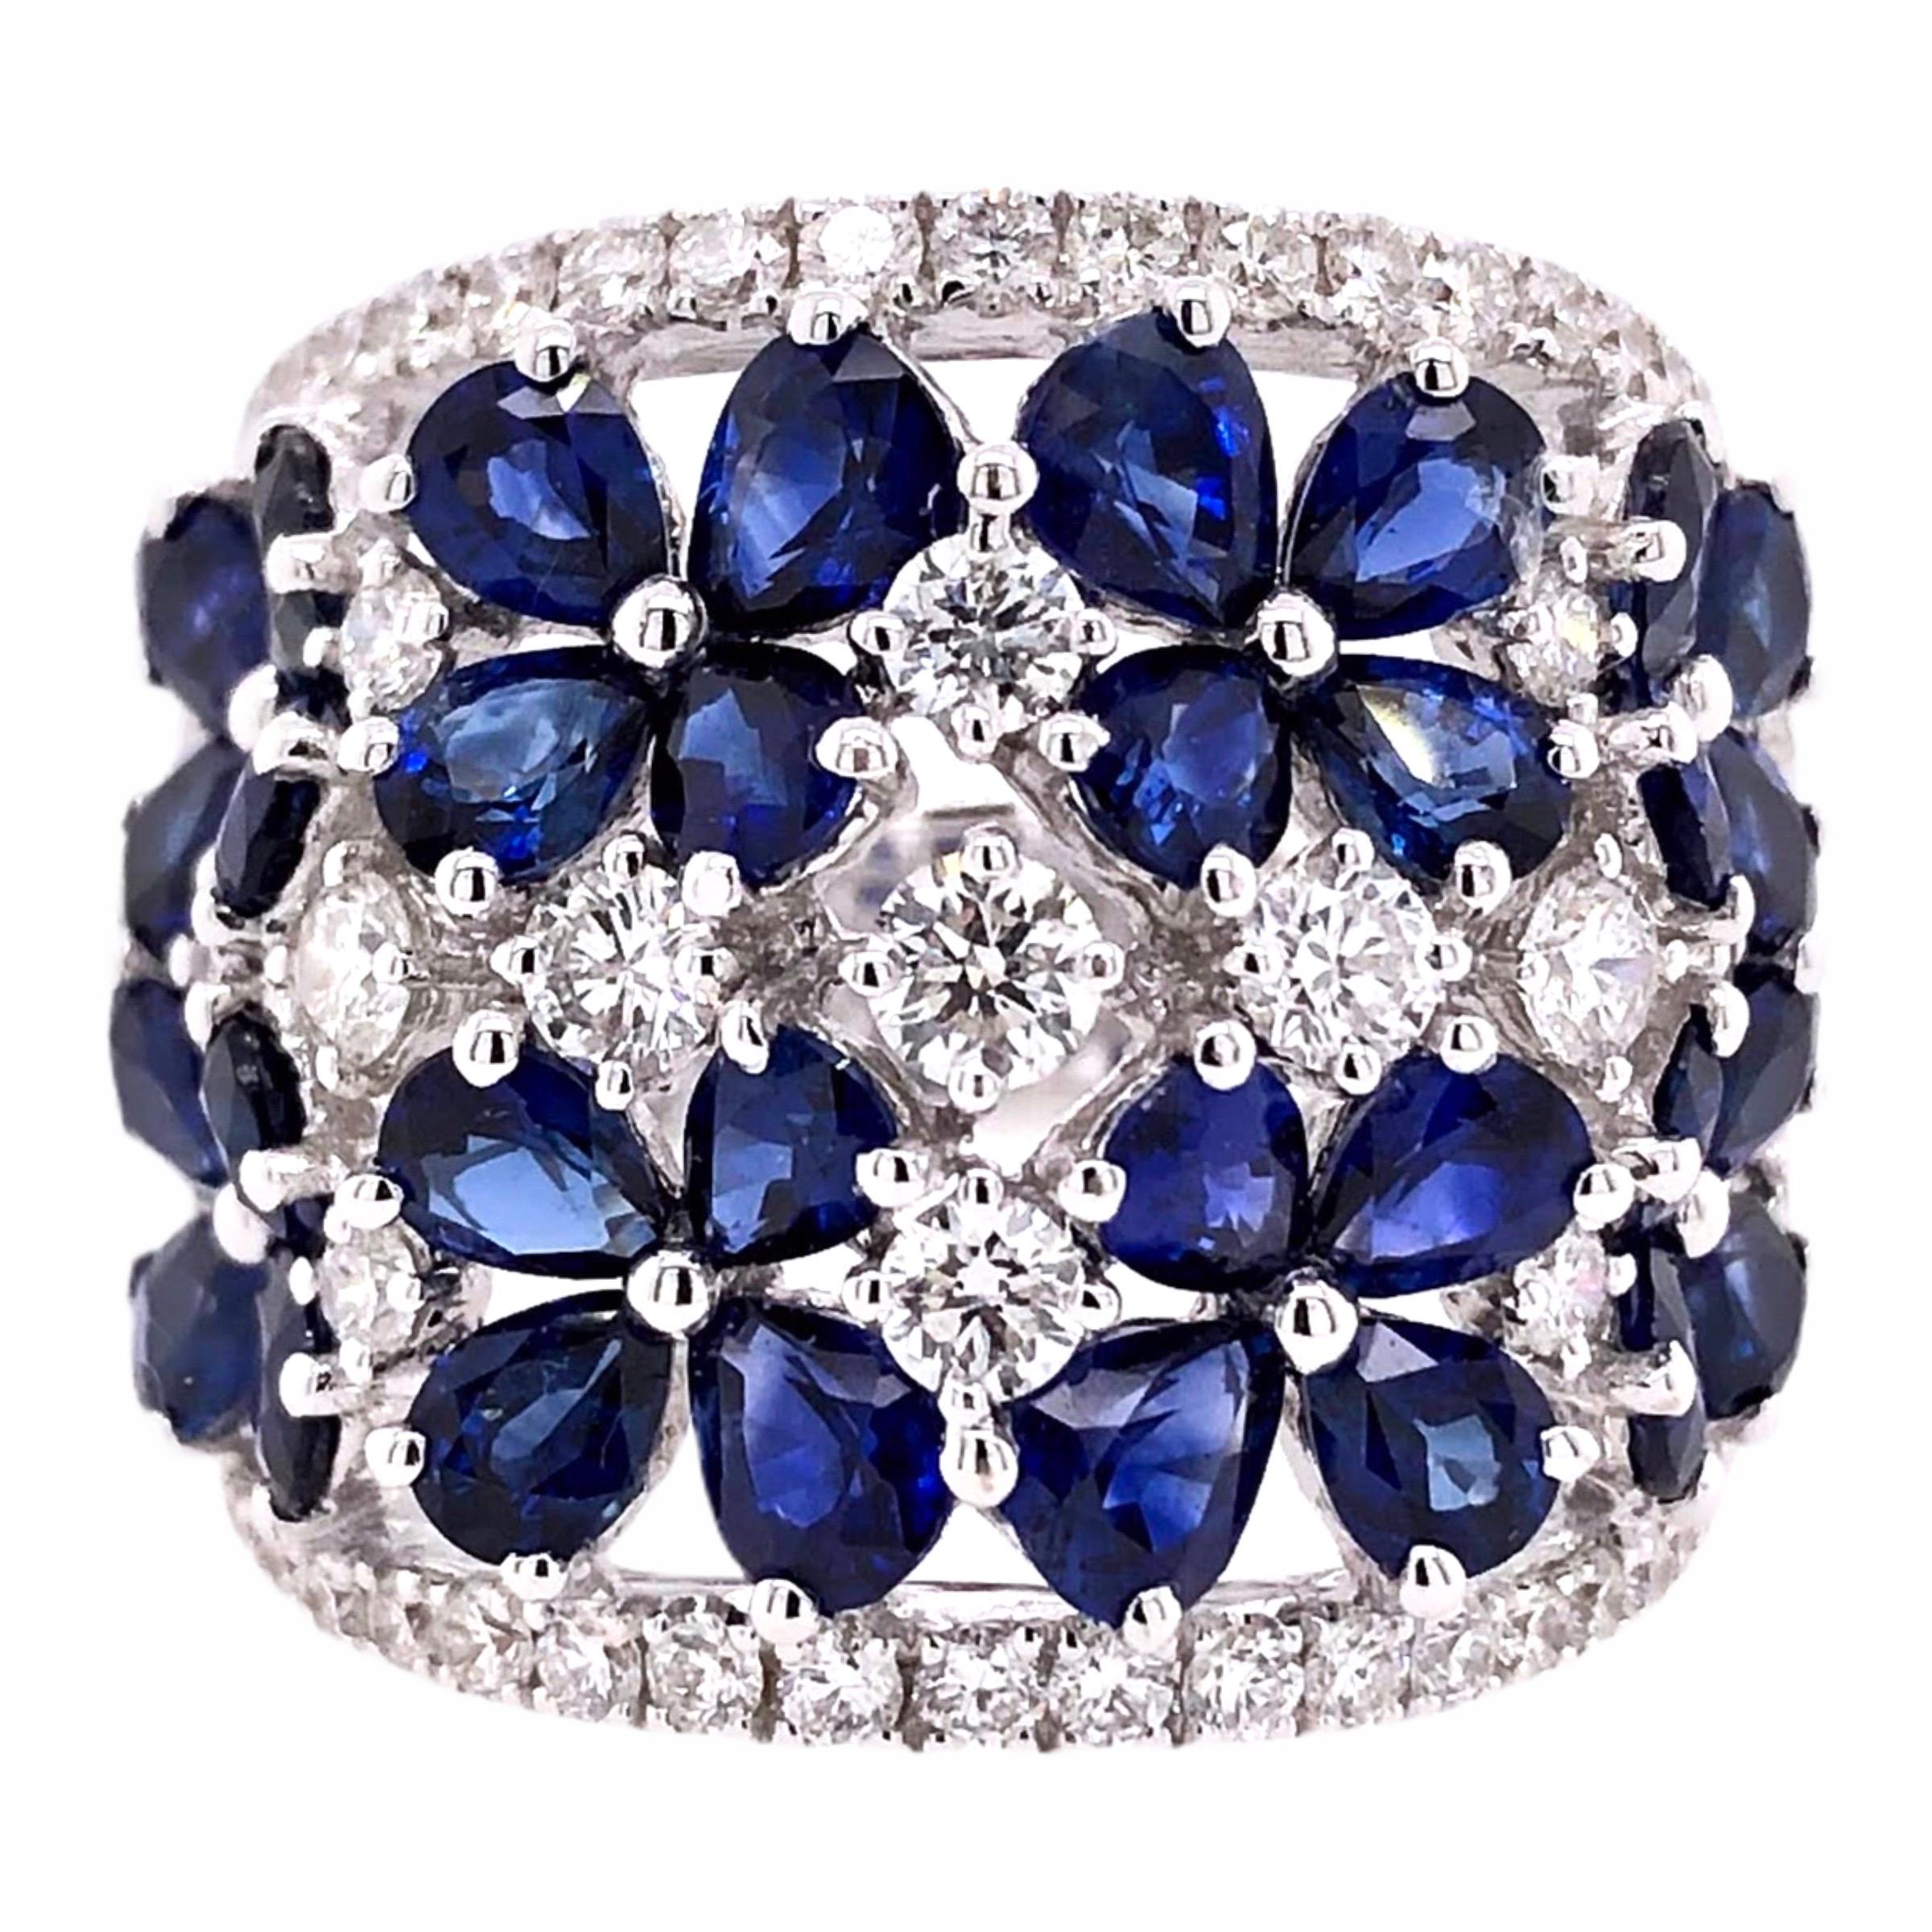 PARIS Craft House Sapphire Diamond Floral Ring in 18 Karat White Gold.

- 32 Pear-cut Sapphires/5.90ct
- 55 Round Diamonds/1.20ct
- 18K White Gold/10.02g

Designed and crafted at PARIS Craft House.